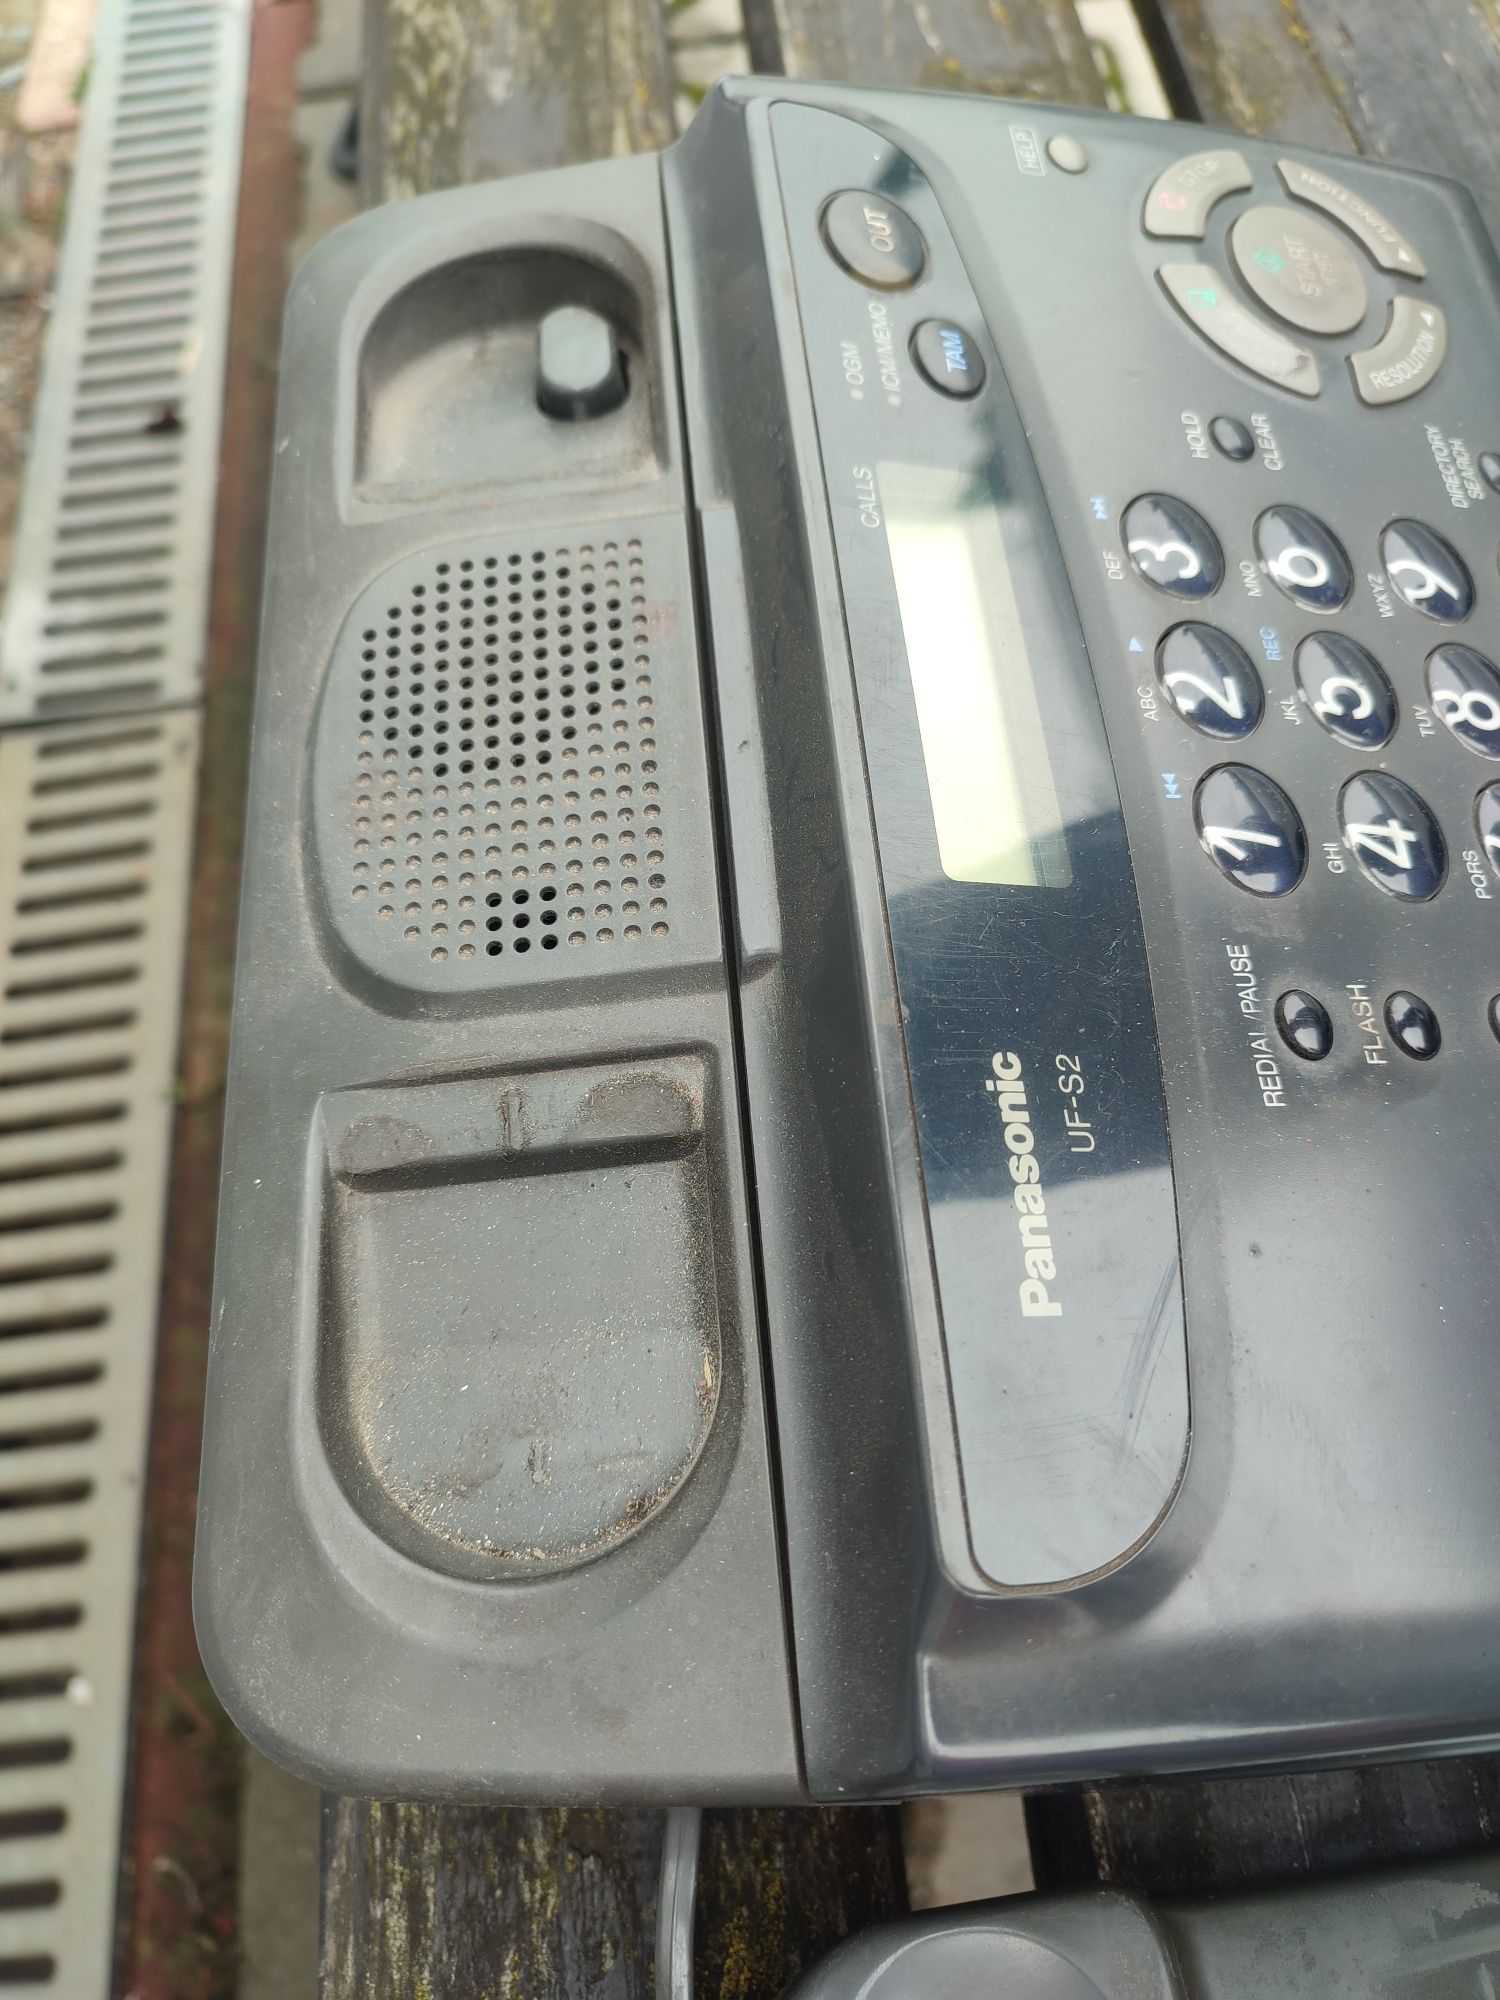 Panasonic uf-s2 telefon i fax SPRAWNY